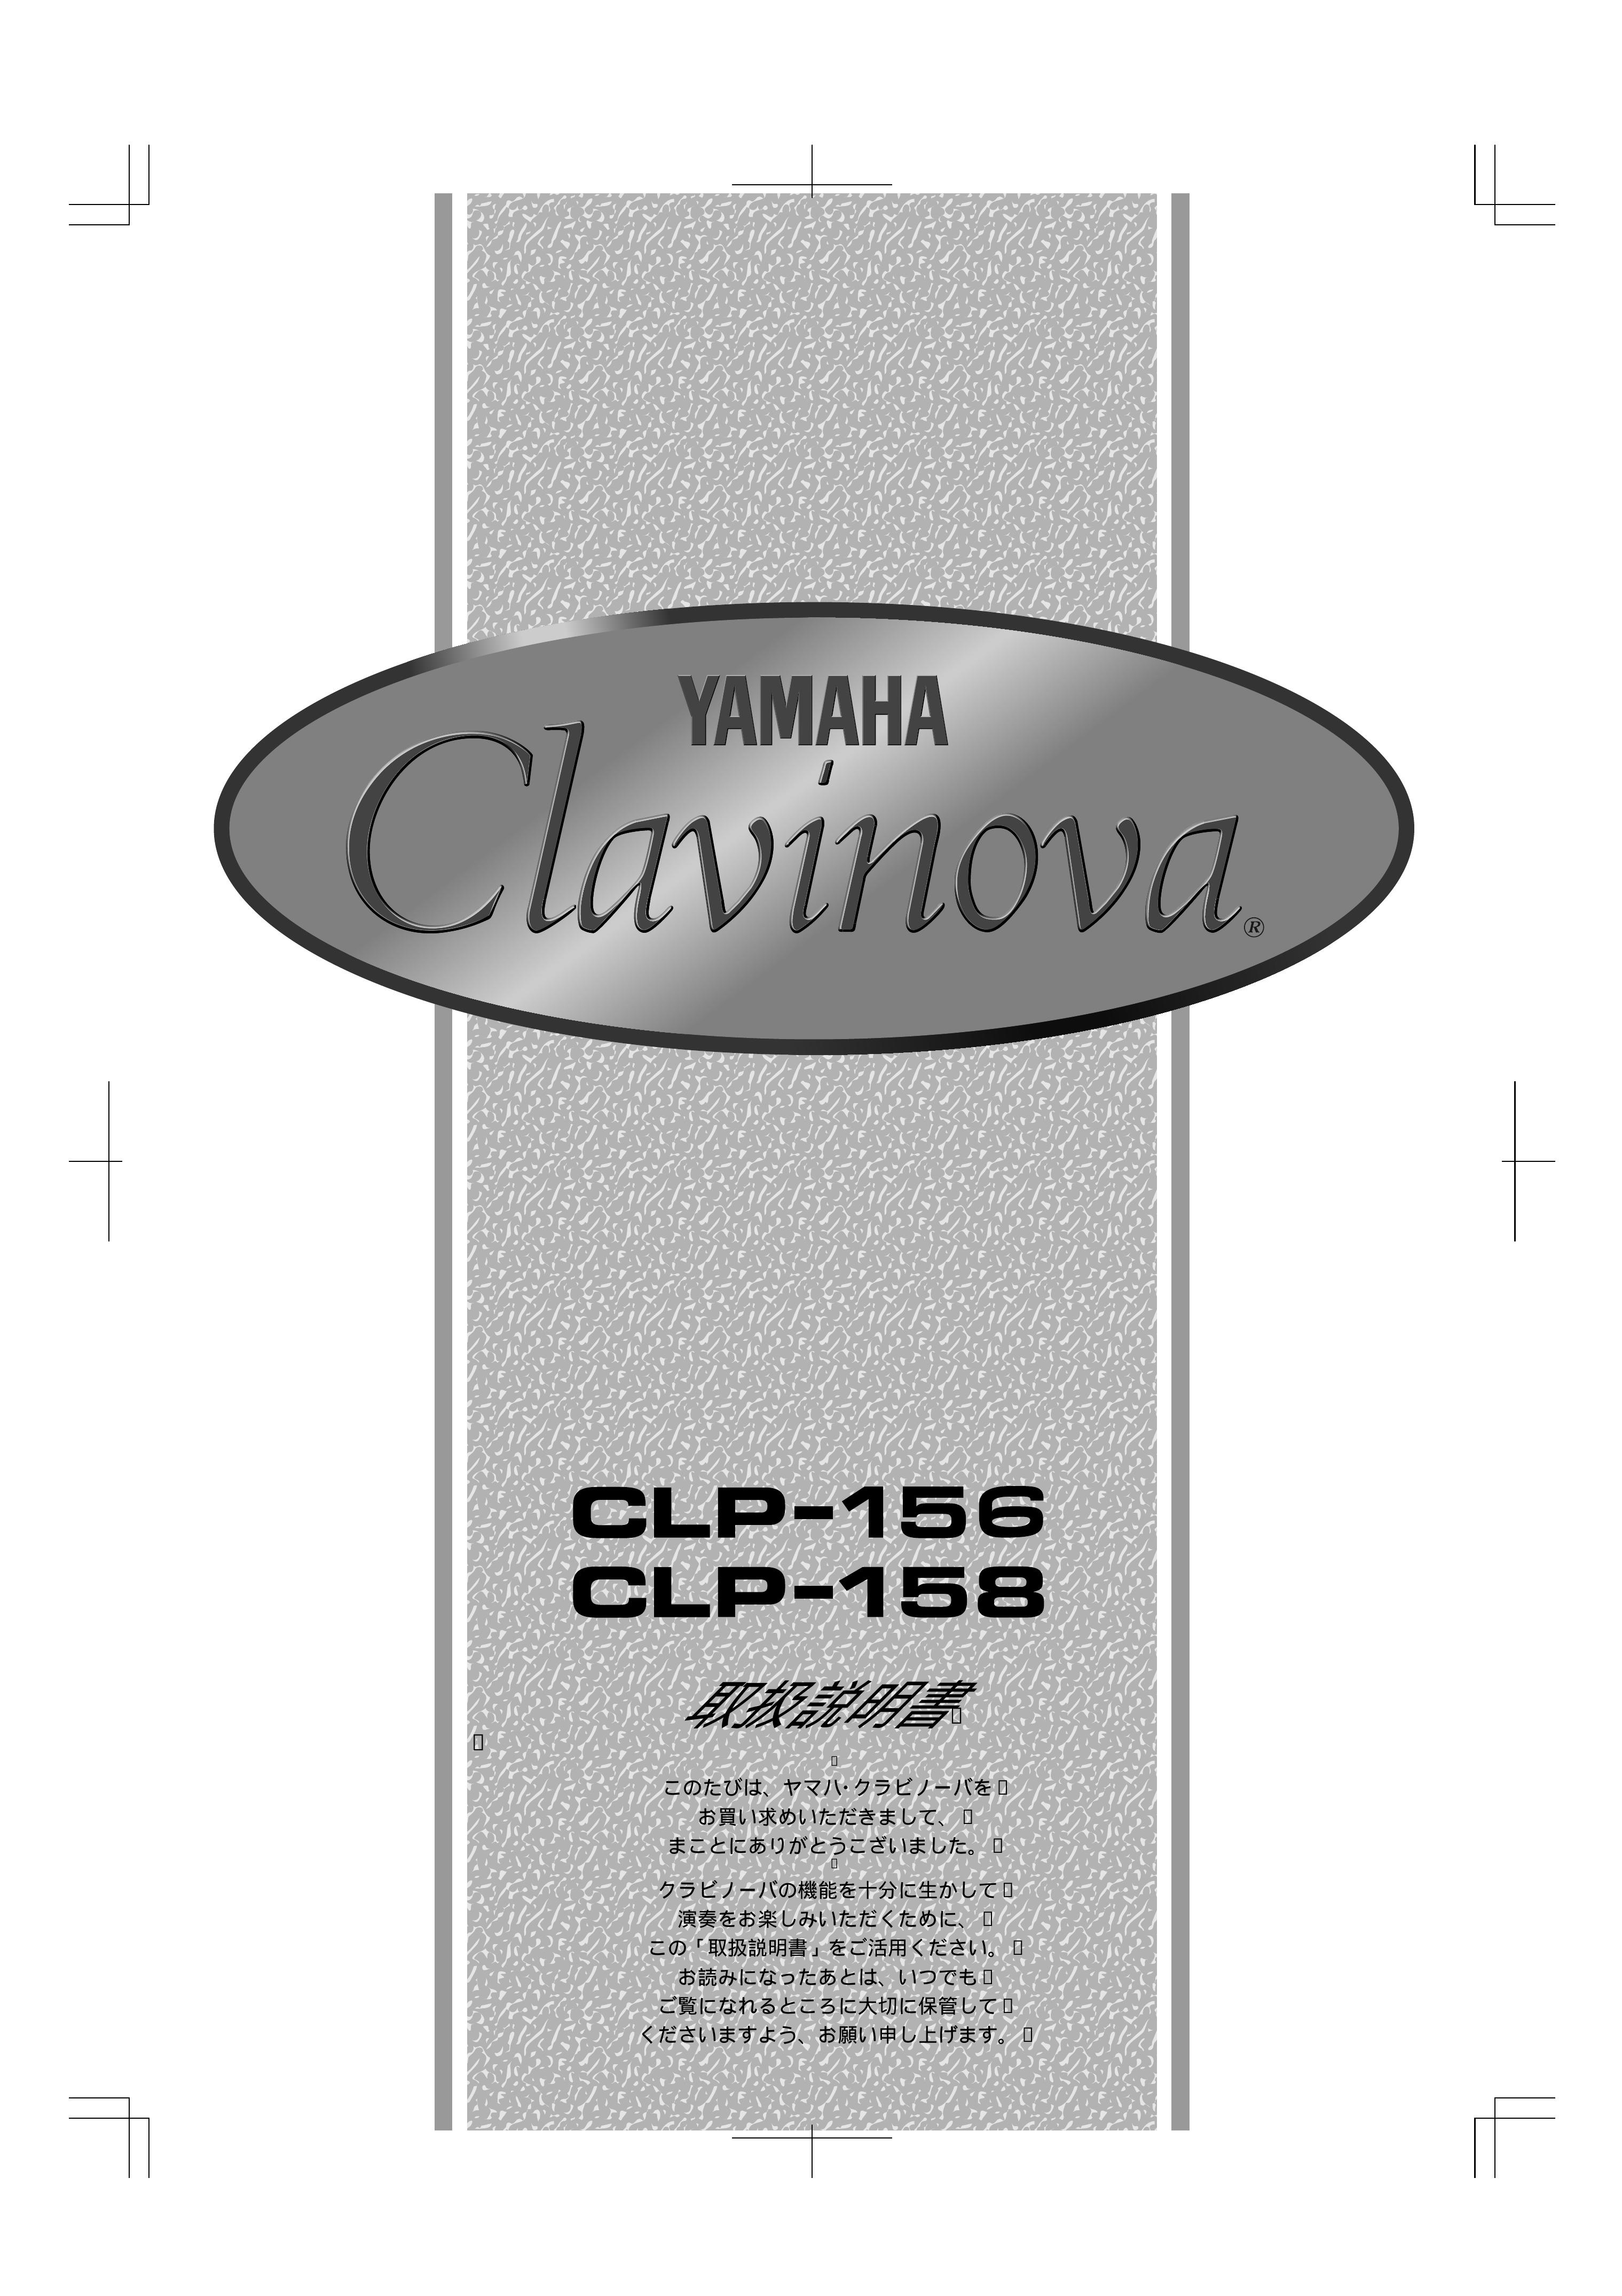 Yamaha CLP-158 Electronic Keyboard User Manual